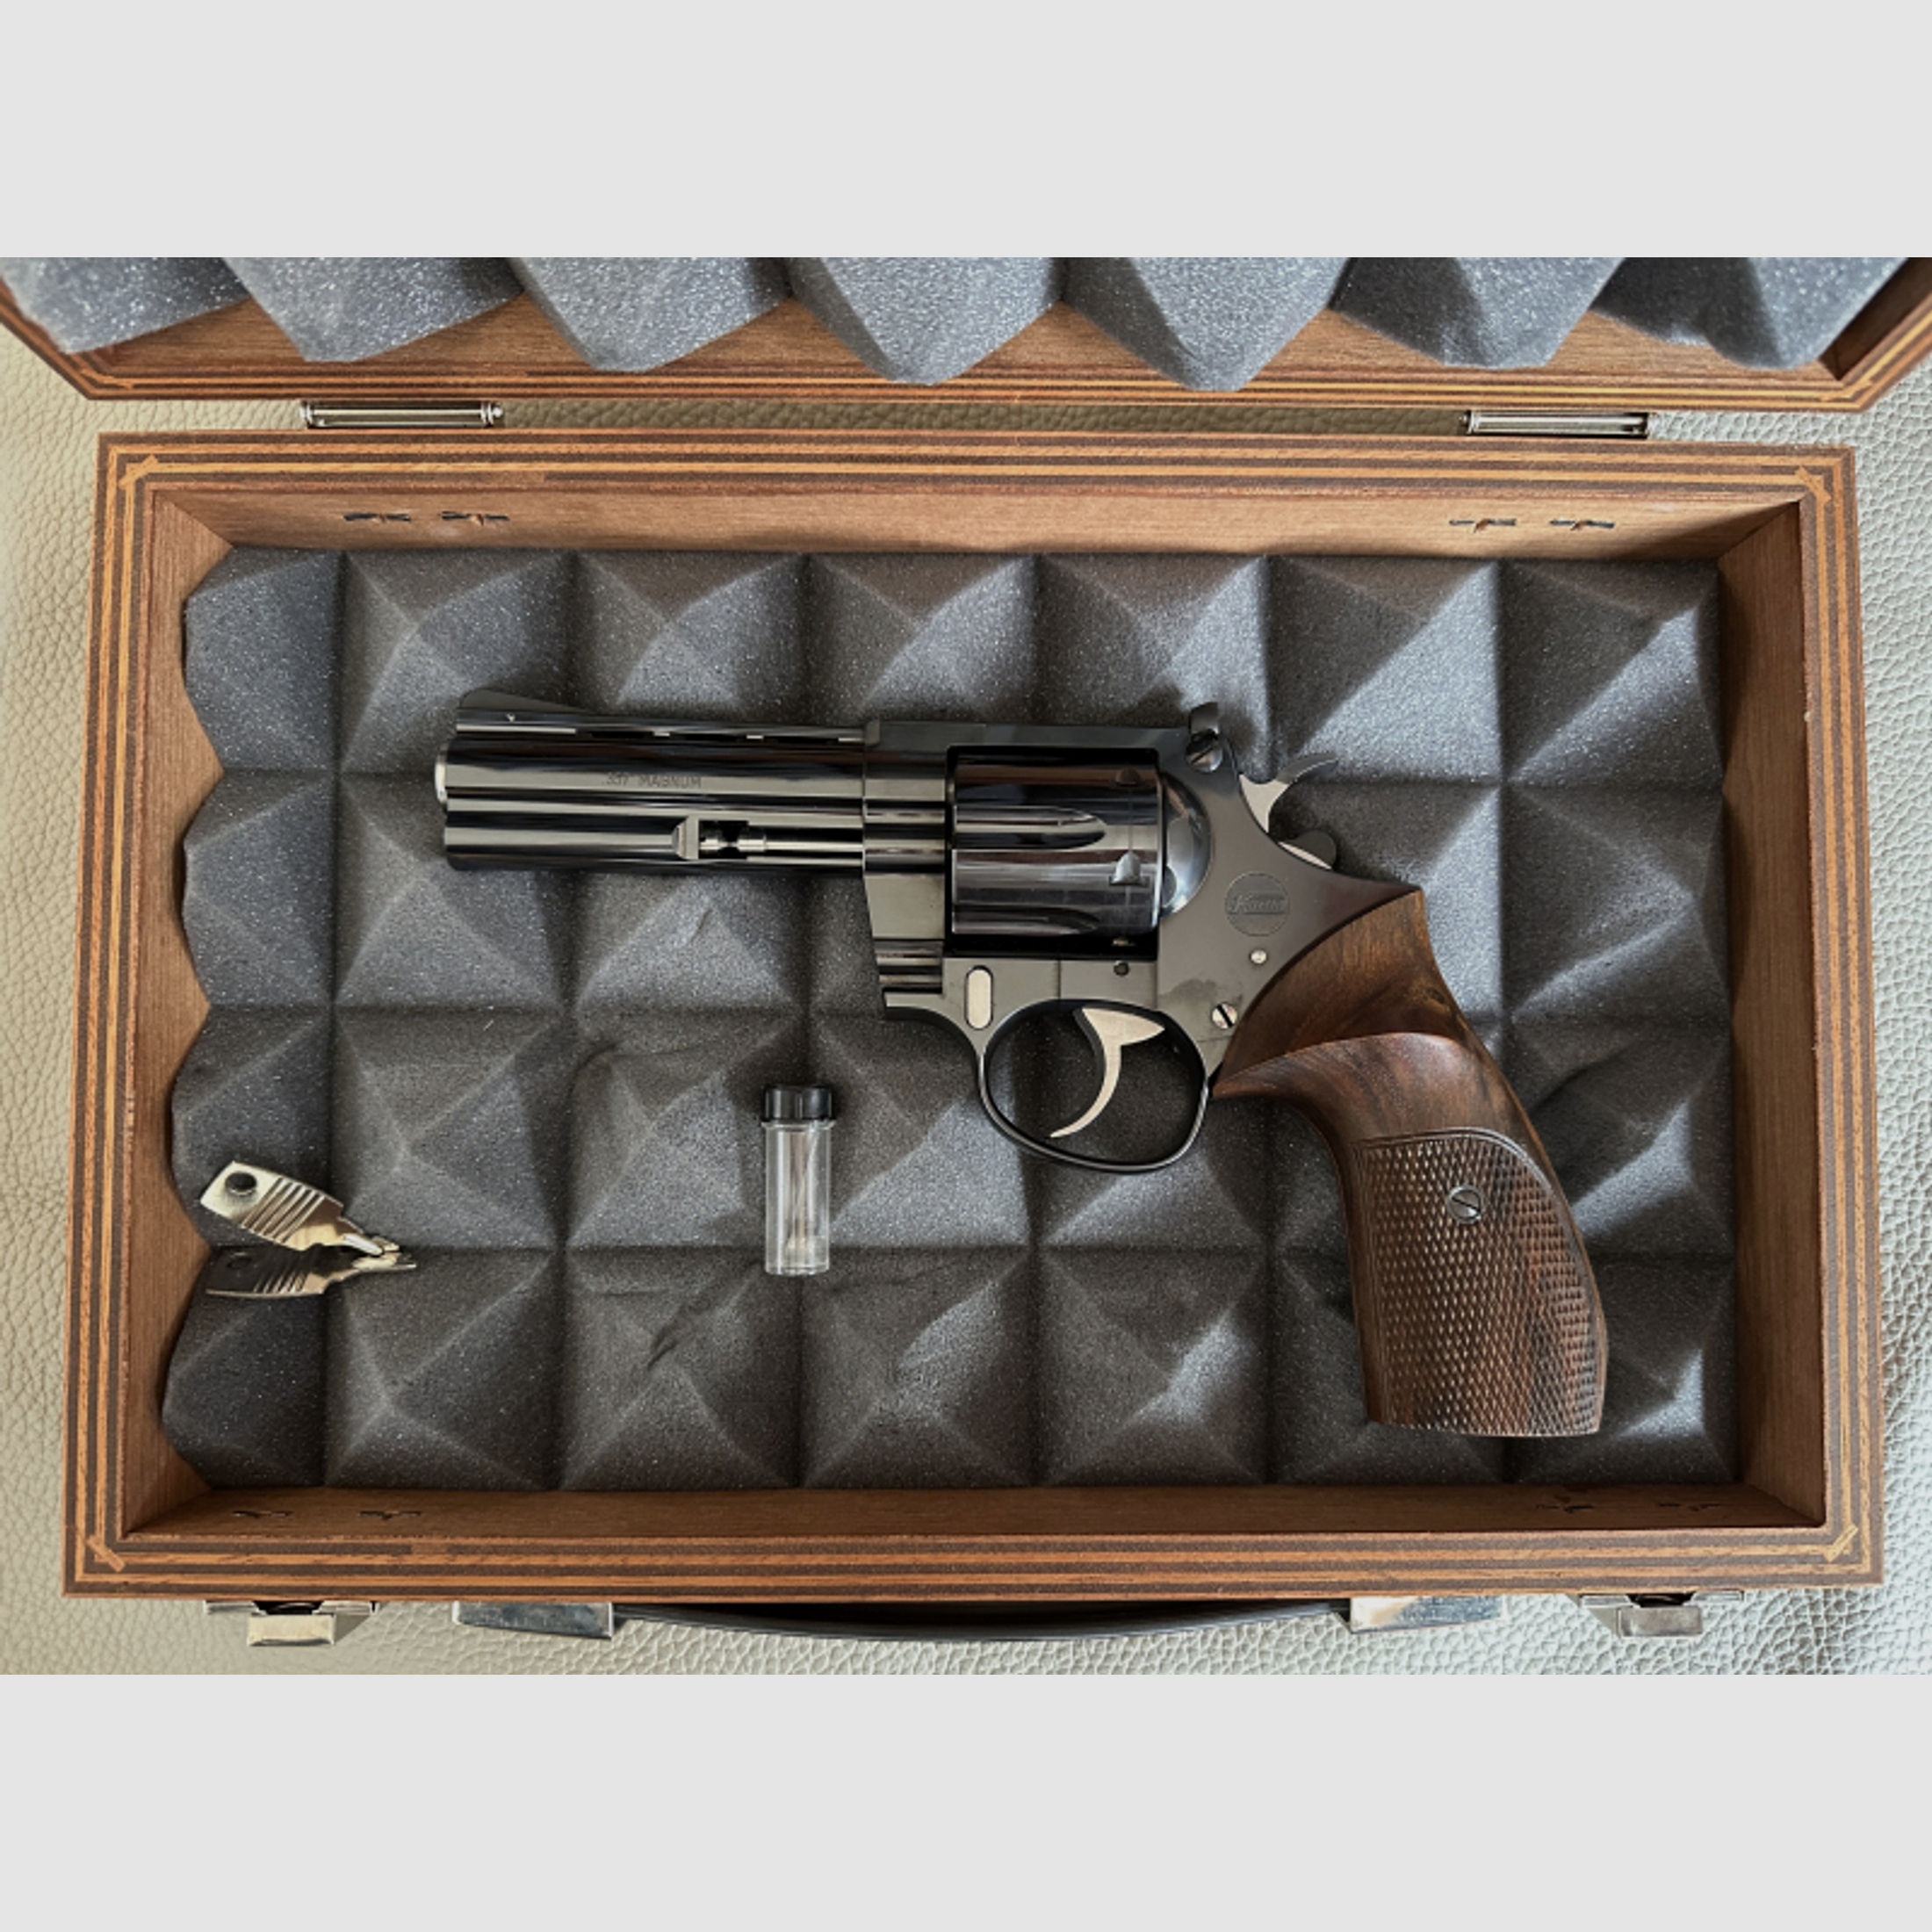 KORTH Revolver COMBAT Kal. .357 Magnum 4 Zoll in original Korth Holzkoffer